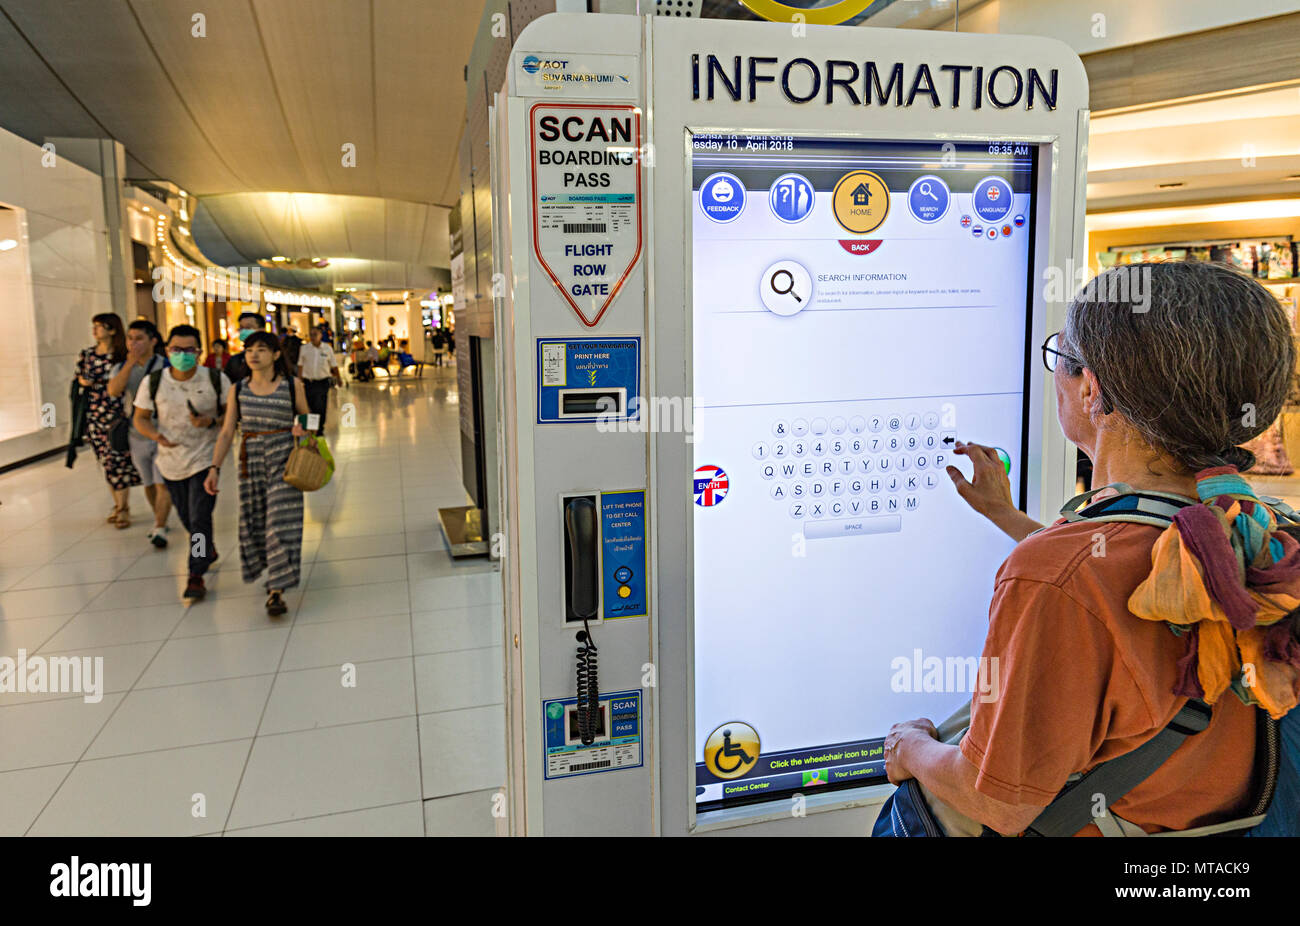 Woman using interactive information board, concourse at airport, Bangkok, Thailand Stock Photo